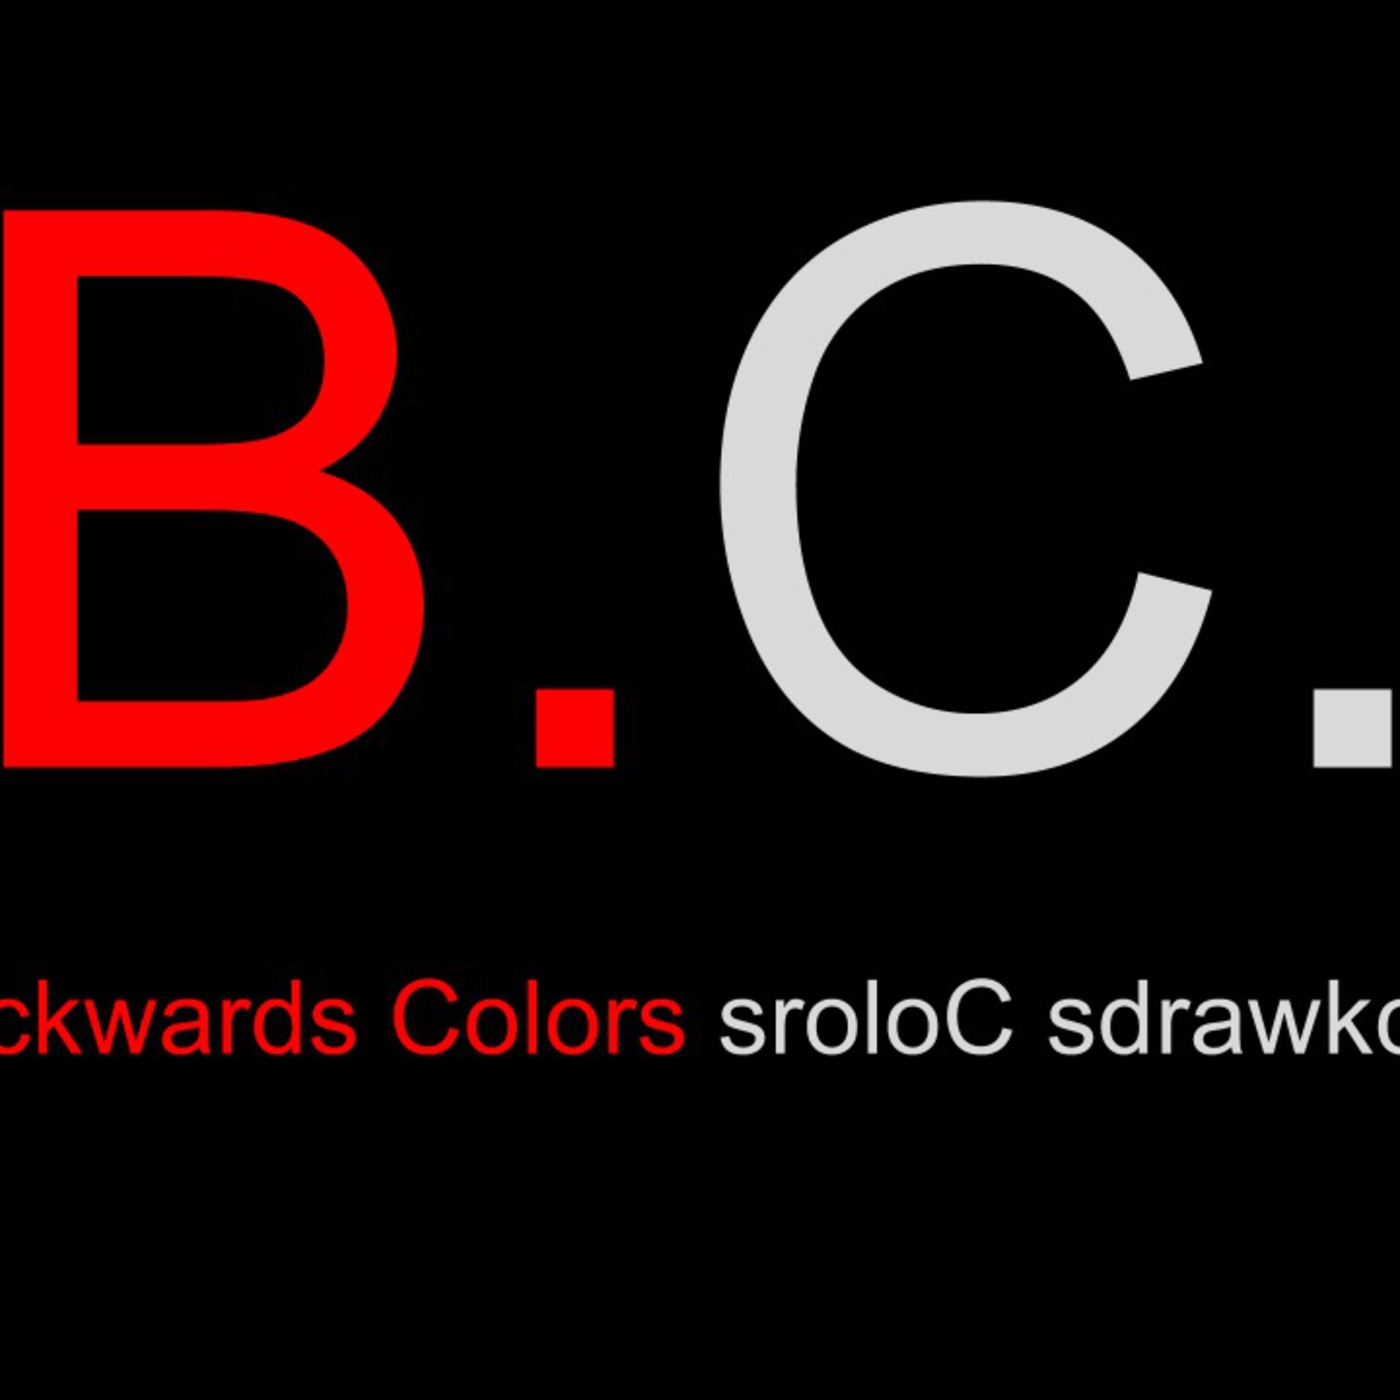 Backwards Colors